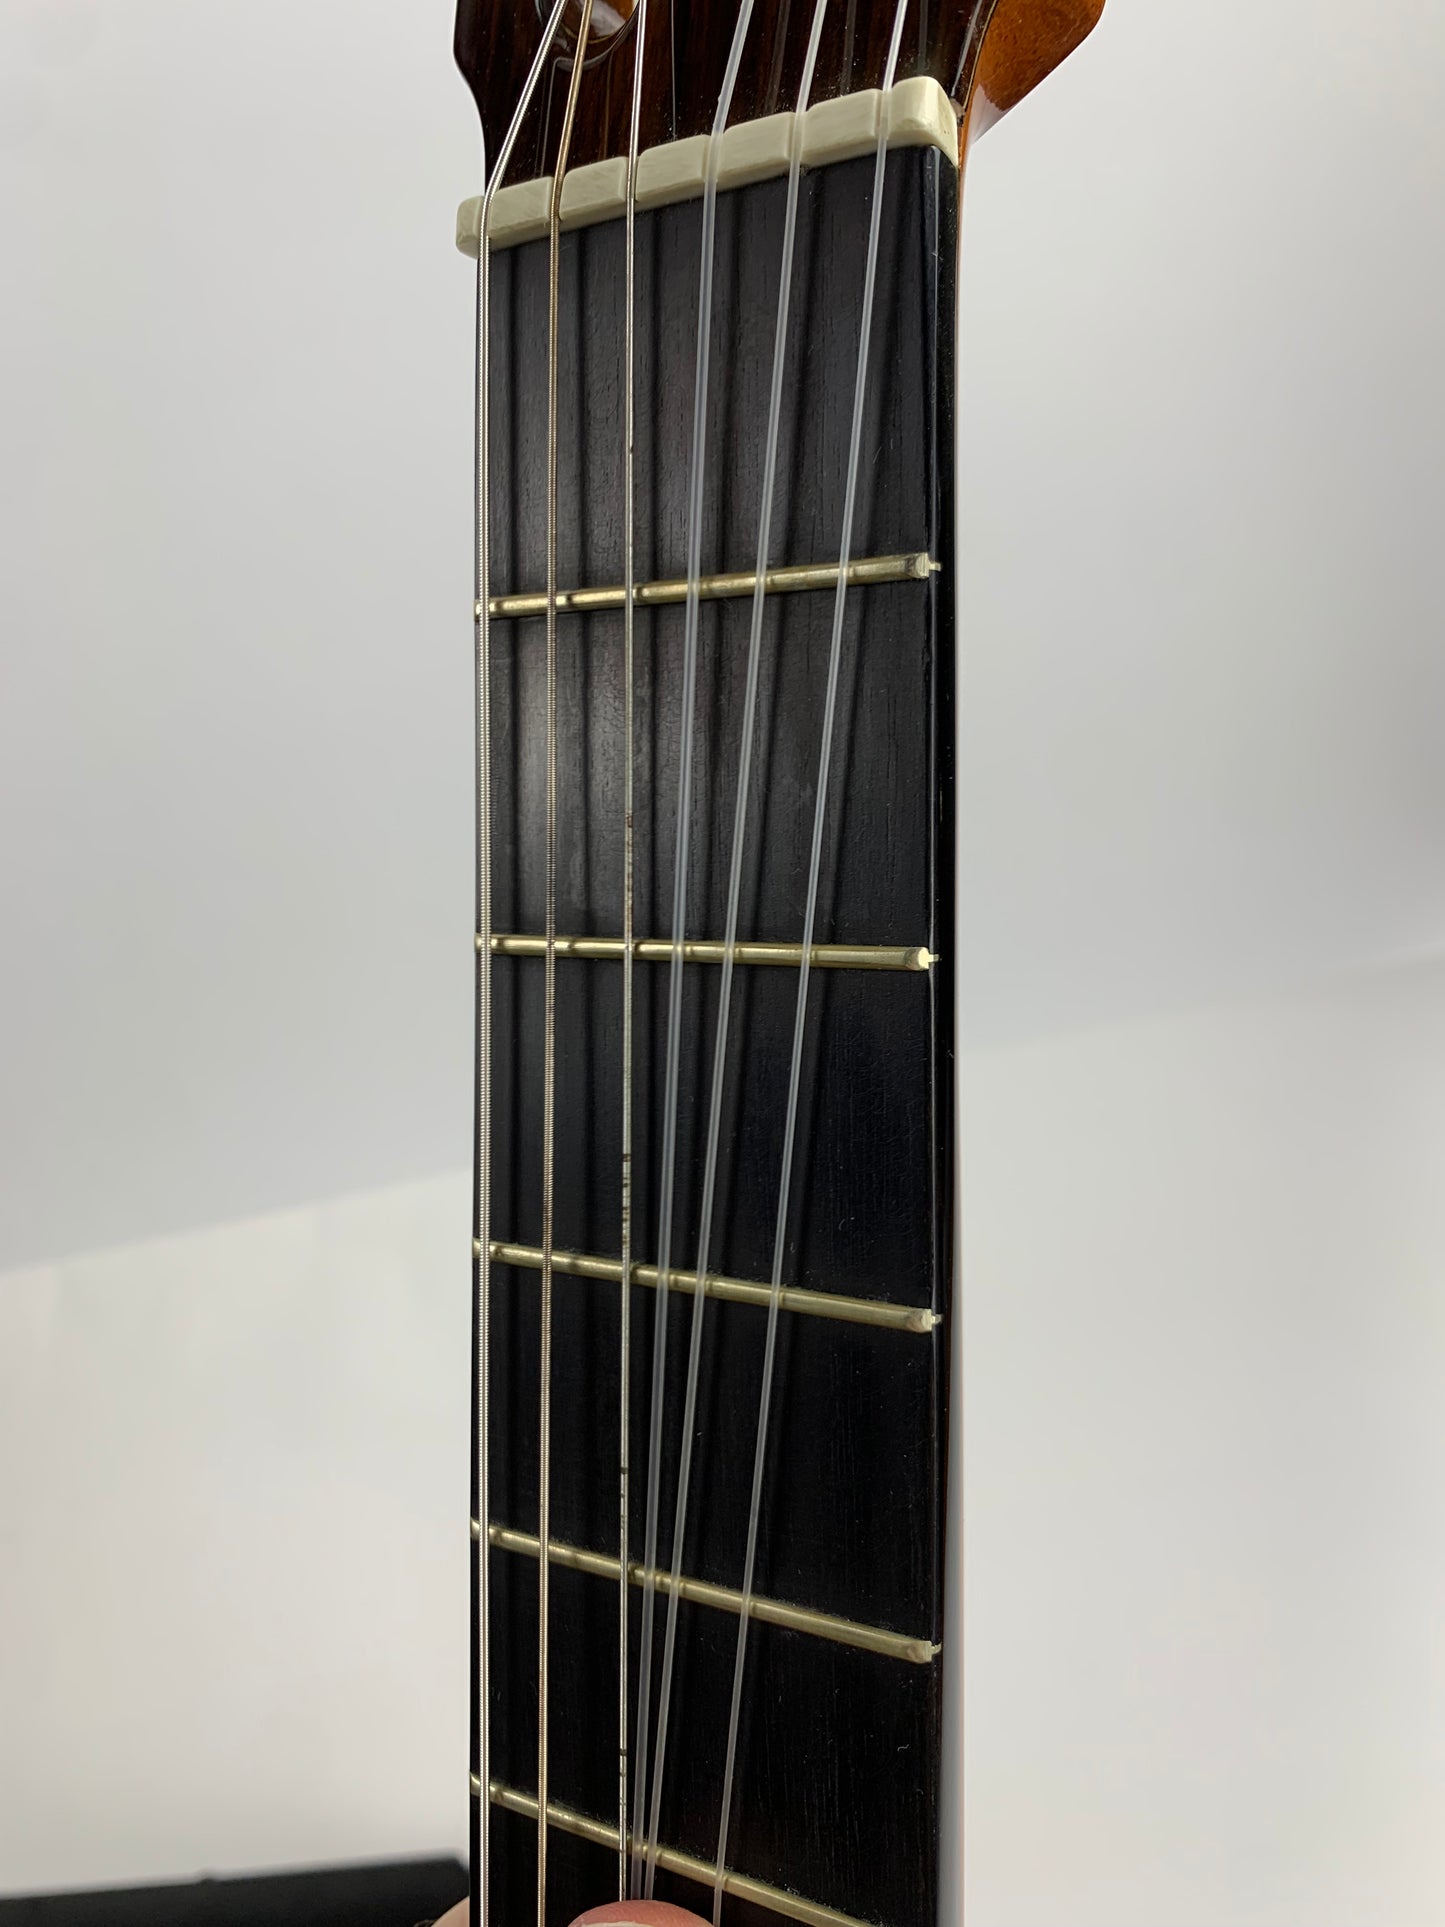 1993 Ramirez 4E Estudio Guitar Classical Nylon Acoustic Guitar Studio